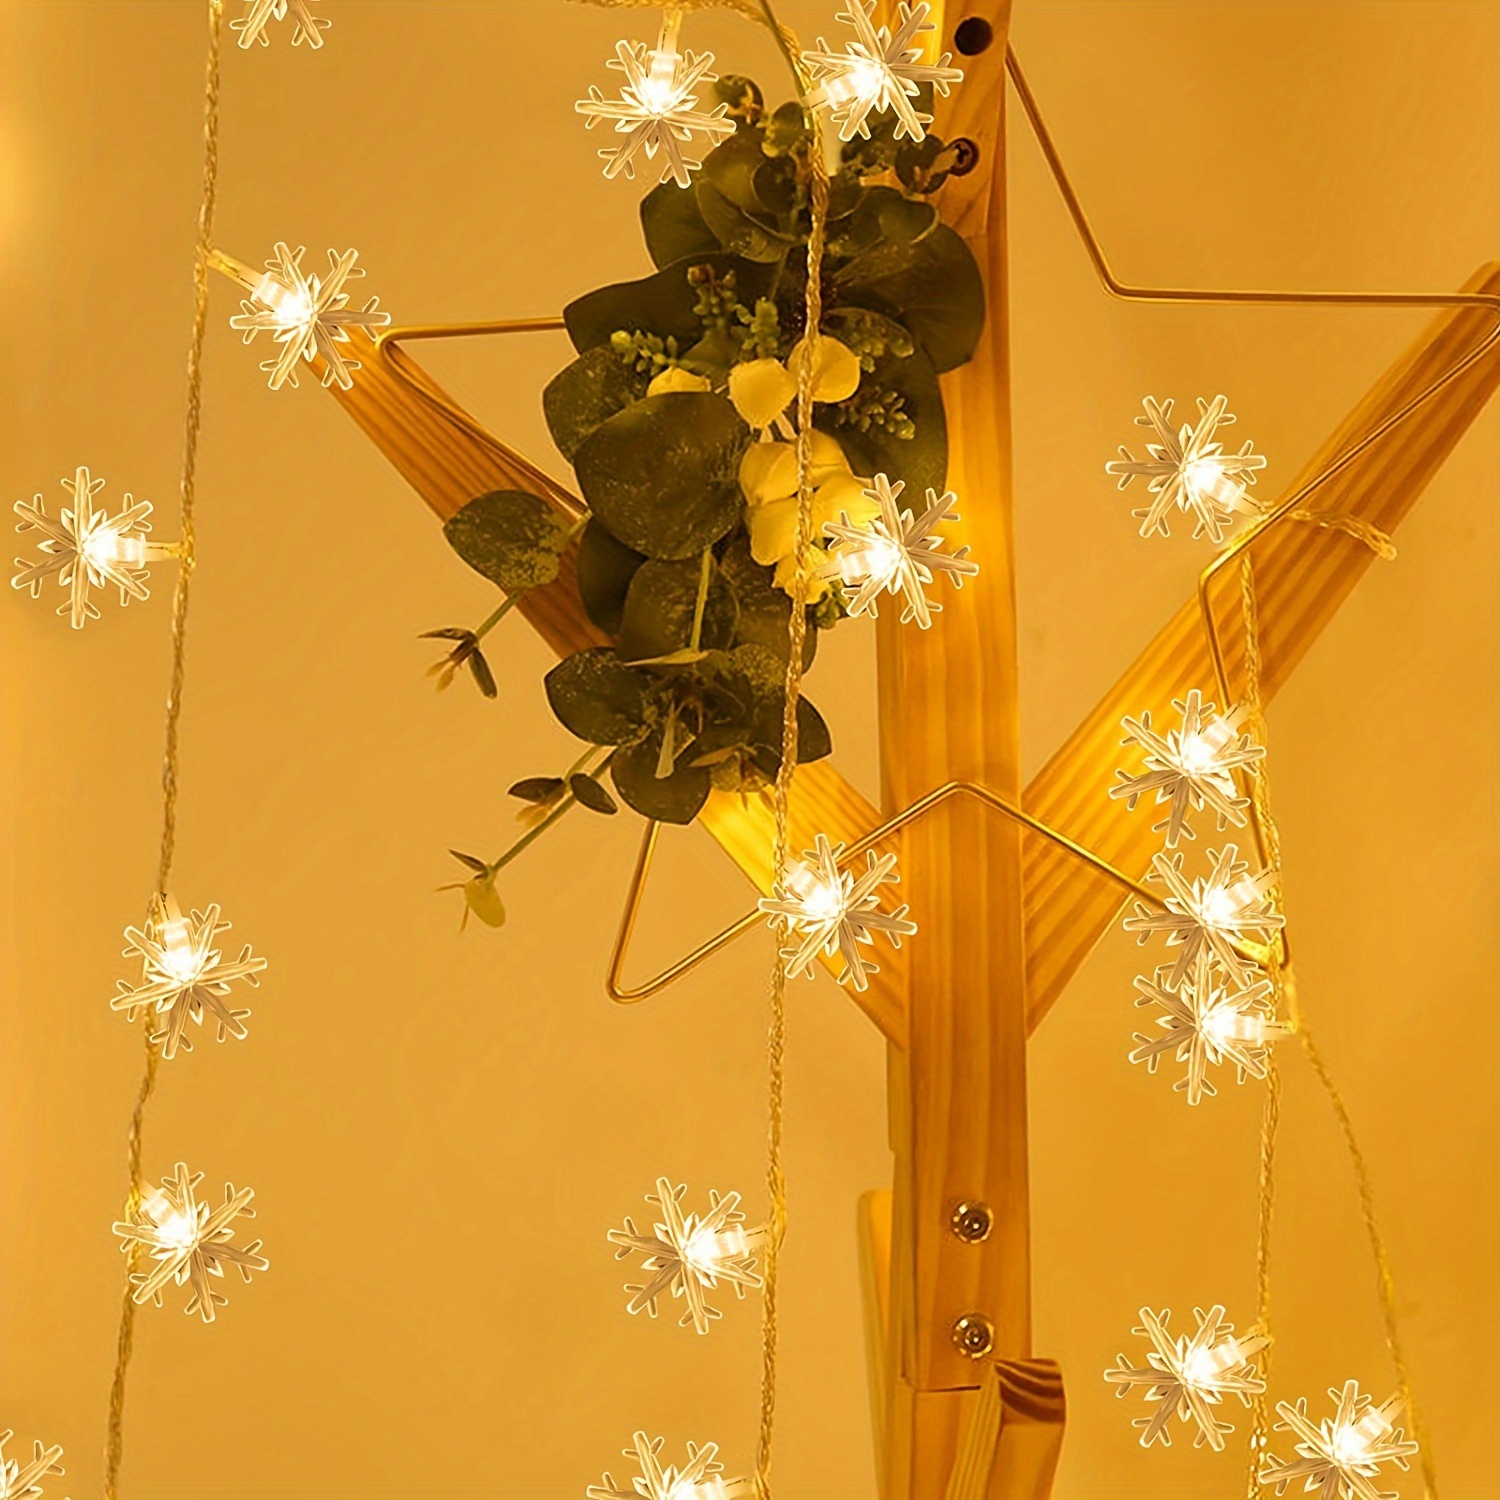 [Lot de 2] Noël Guirlande Lumineuse Intérieur,4M 40 LED Flocon de Neige  Guirlande Lumineuse à Piles Blanc Chaud Sapin de Noël[O1798]